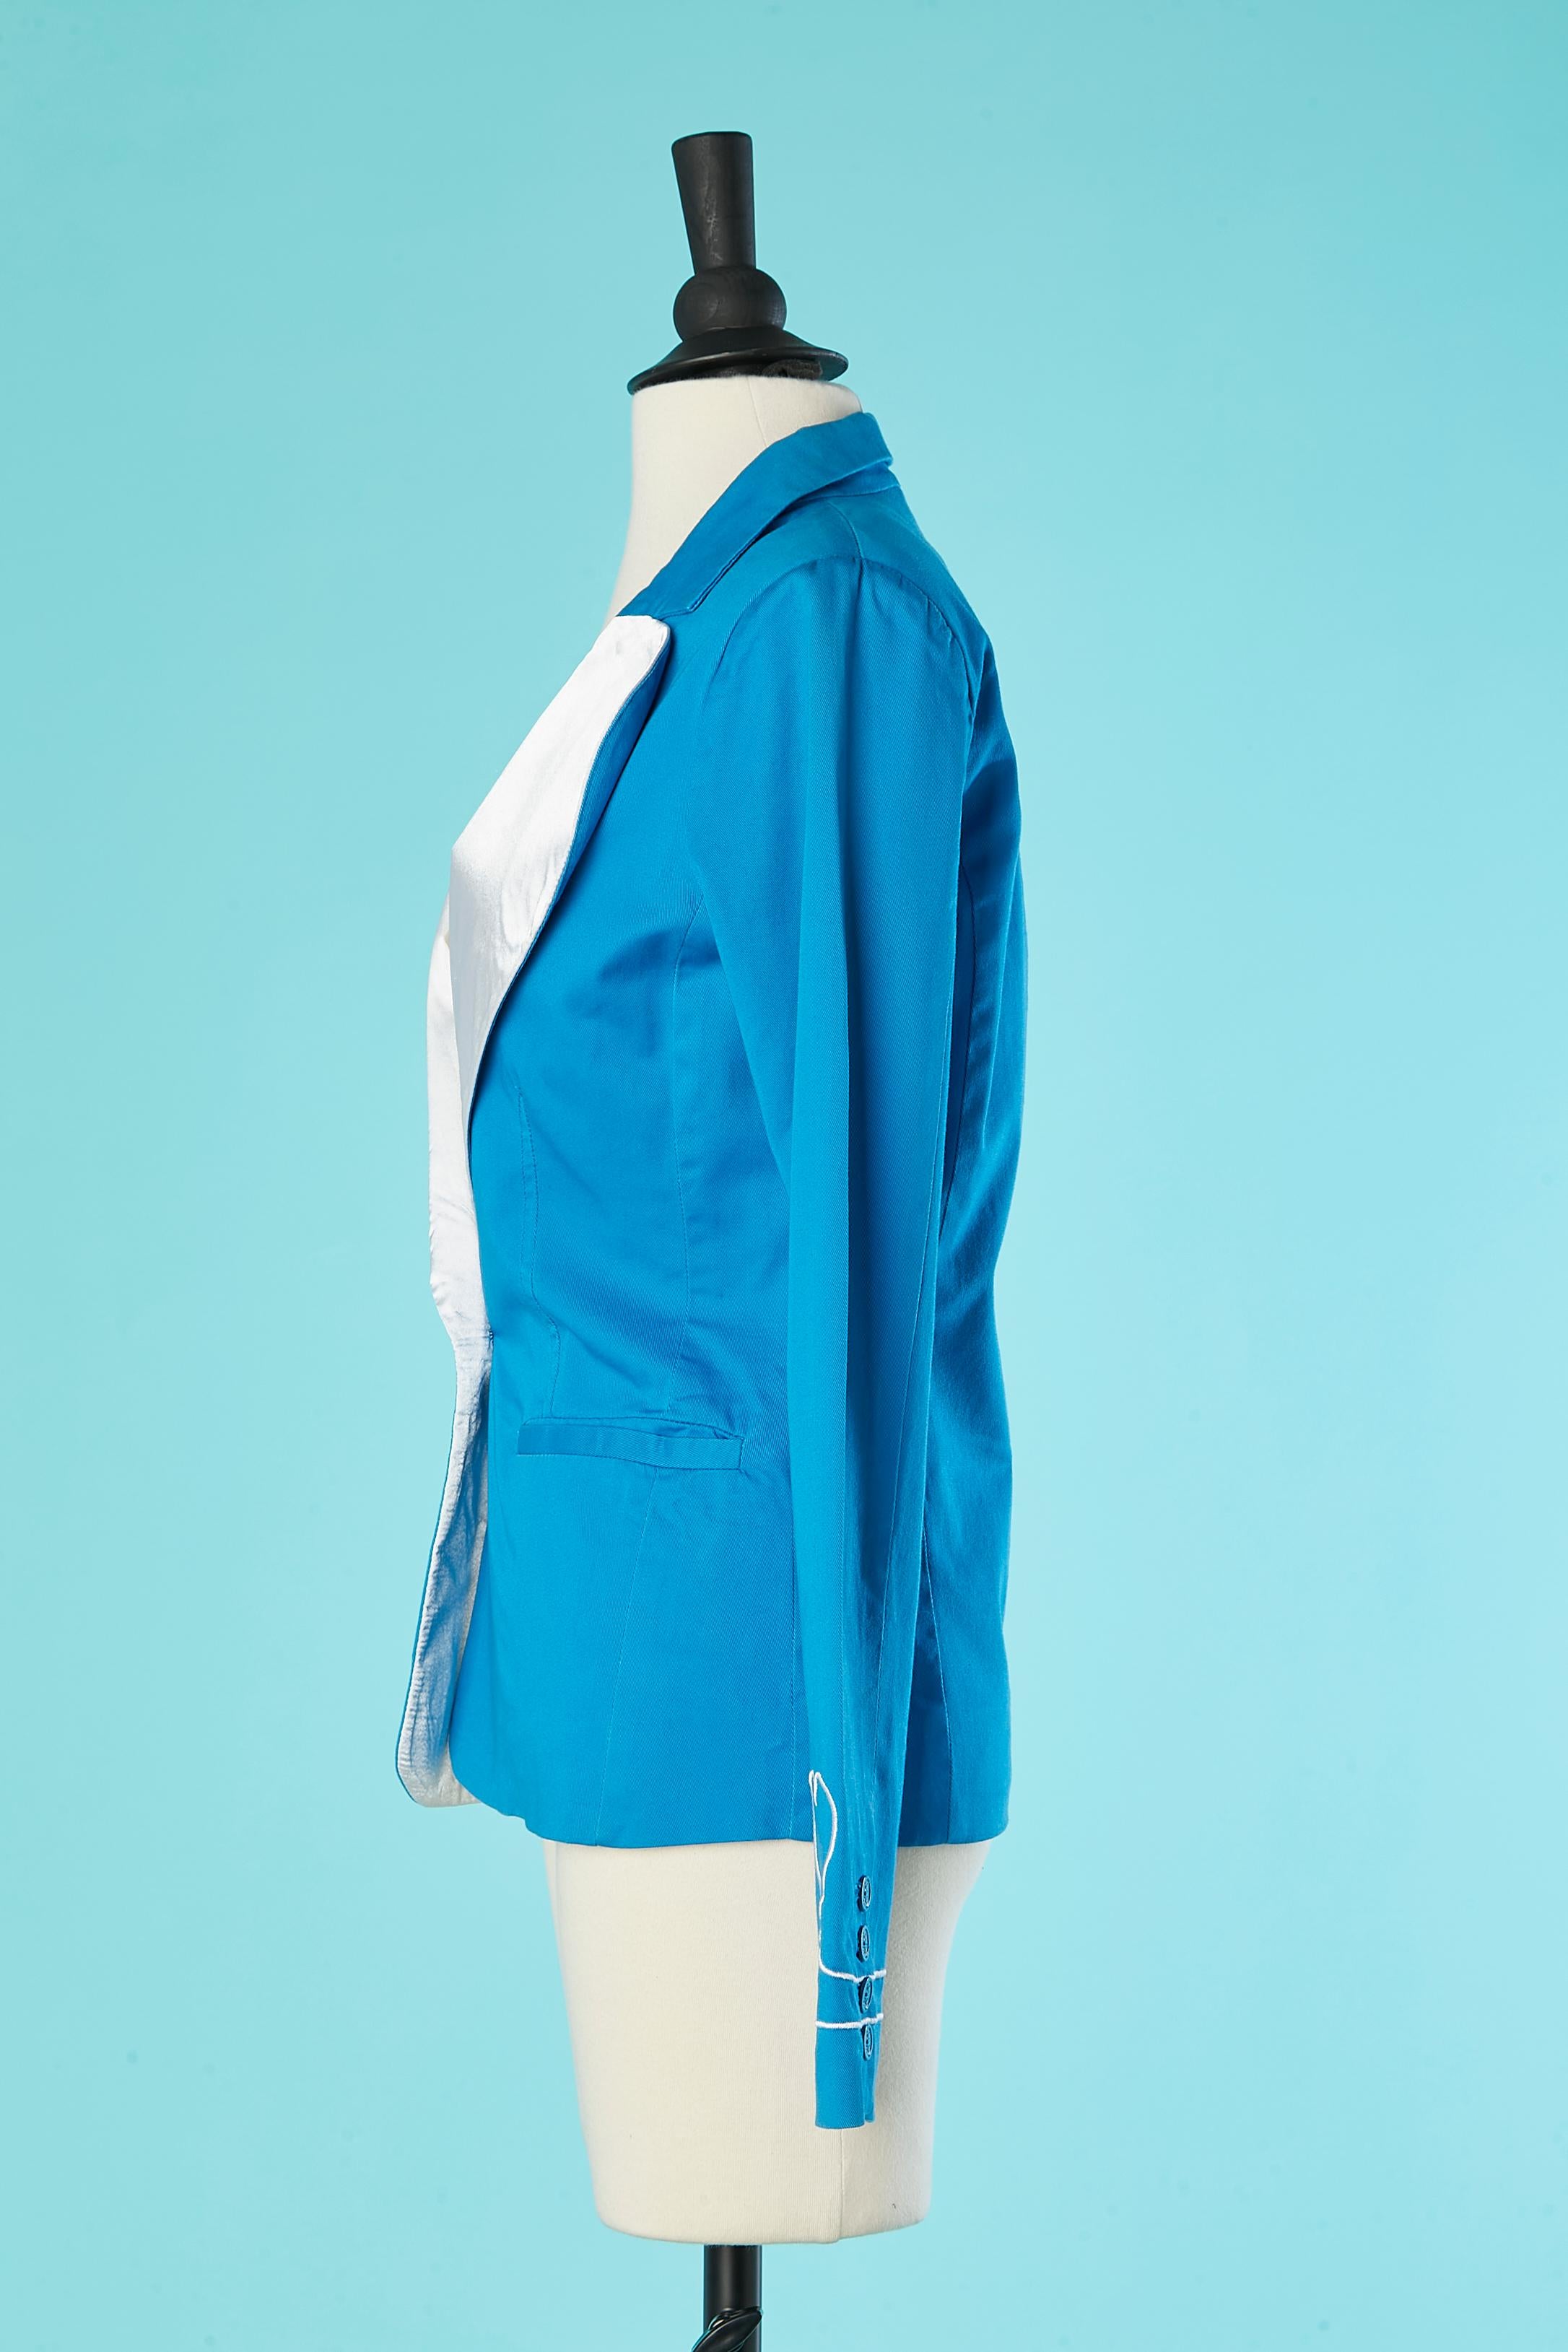 Blue cotton jacket with a white heart collar JC/DC (Jean-Charles de Castelbajac) For Sale 1